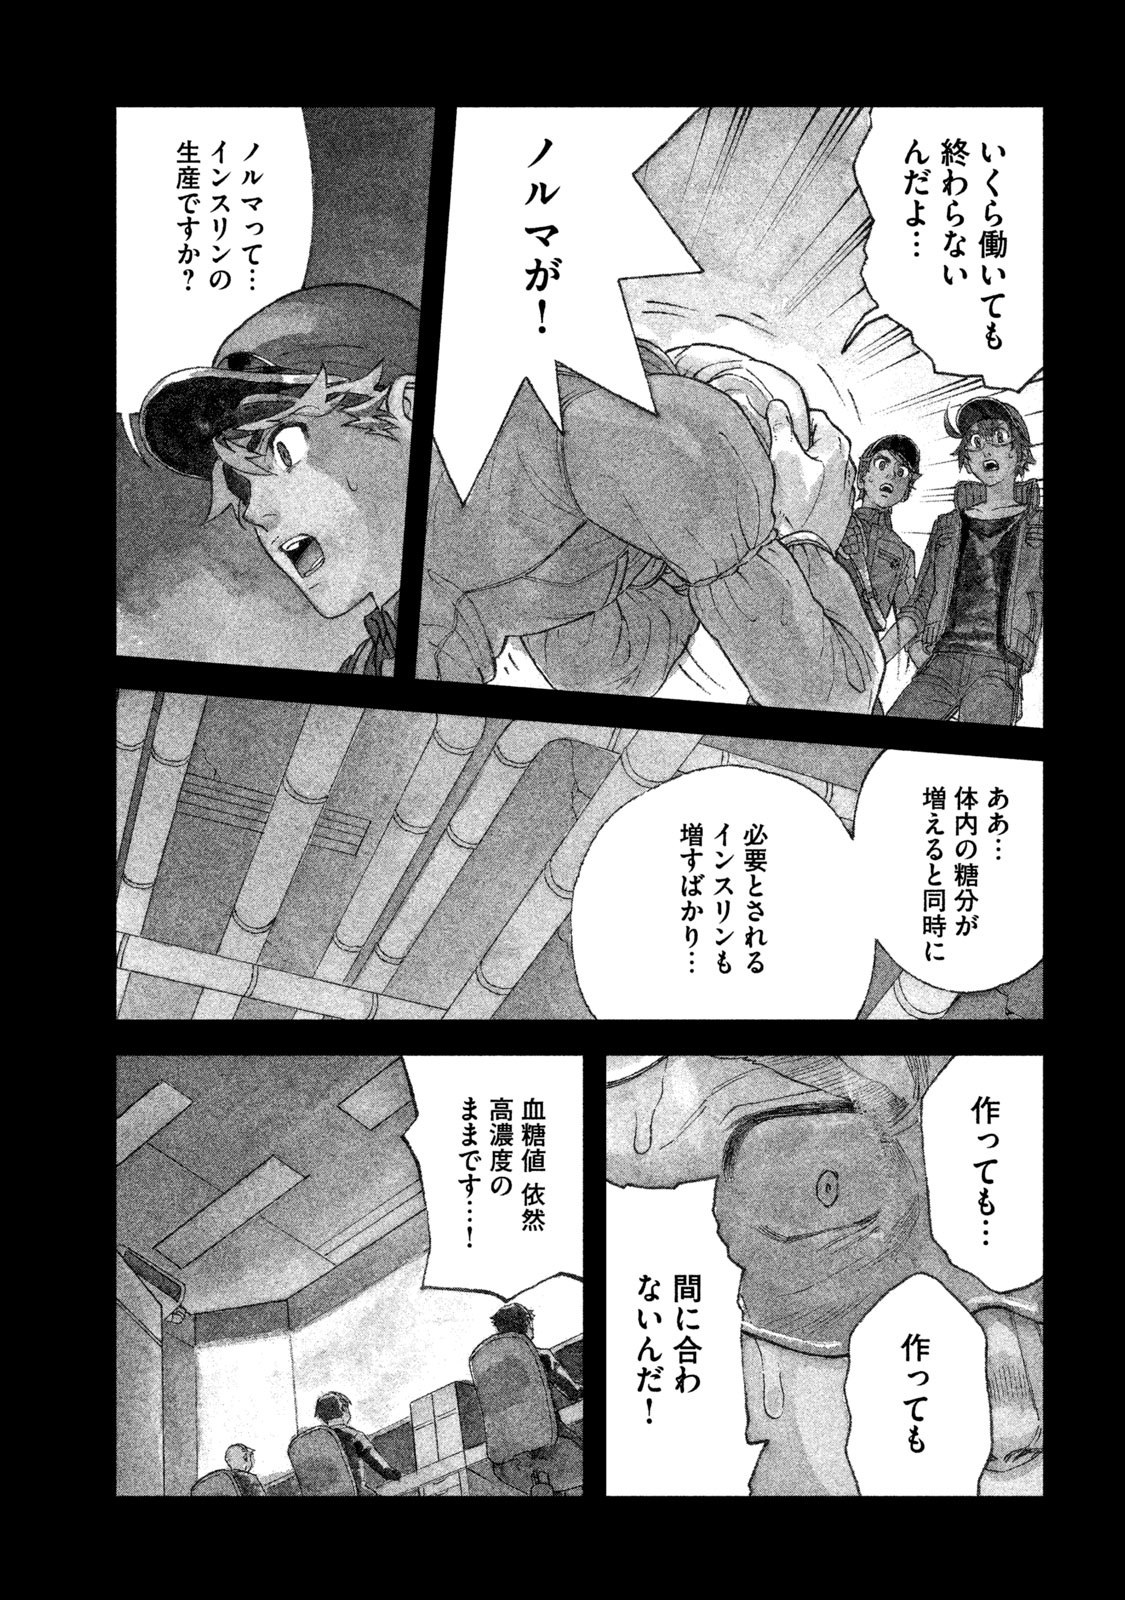 Hataraku Saibou BLACK - Chapter 19 - Page 5